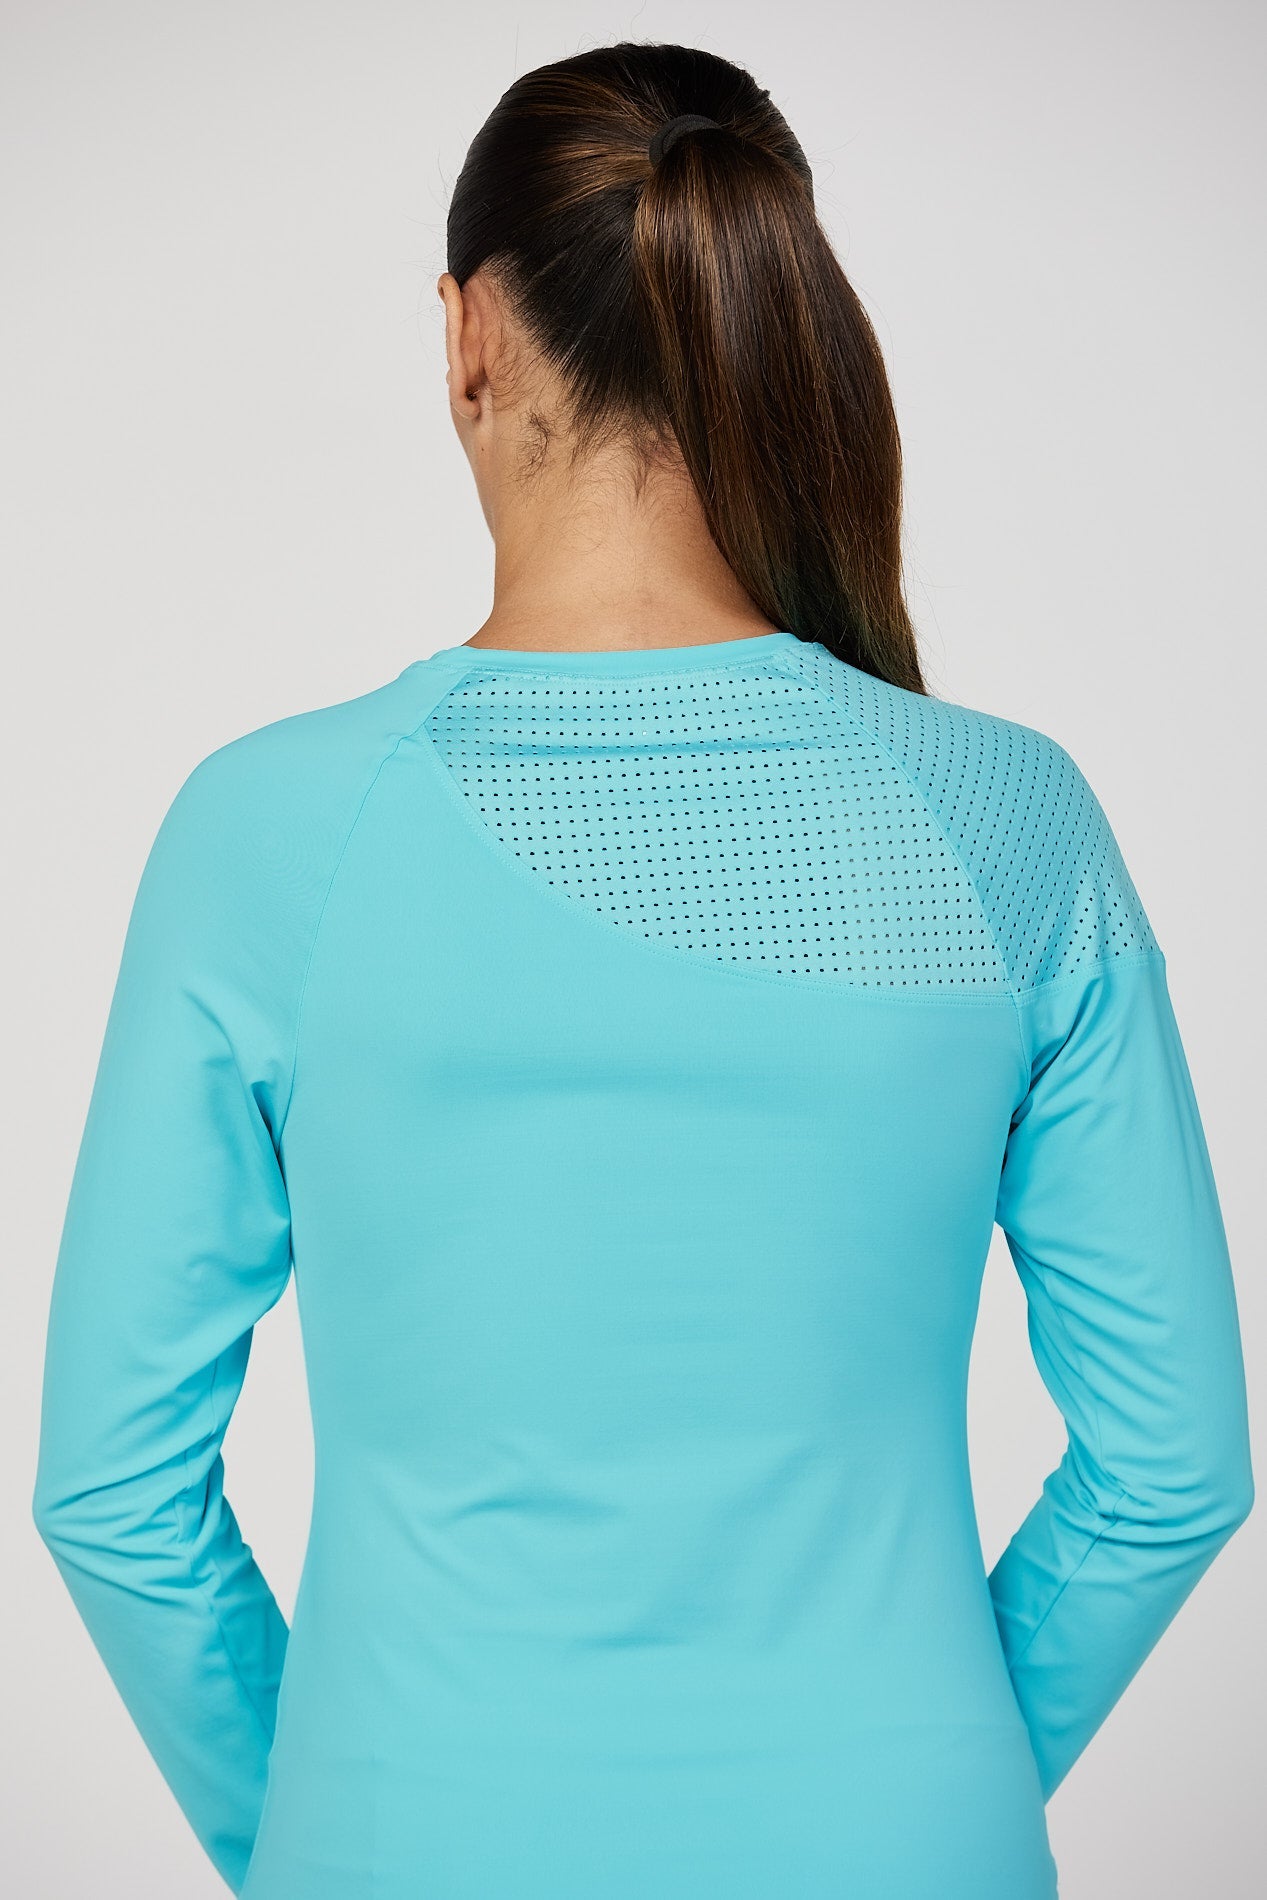 Women's Isla Bonita Raglan Long Sleeve Sports Top by Sofibella , back close up